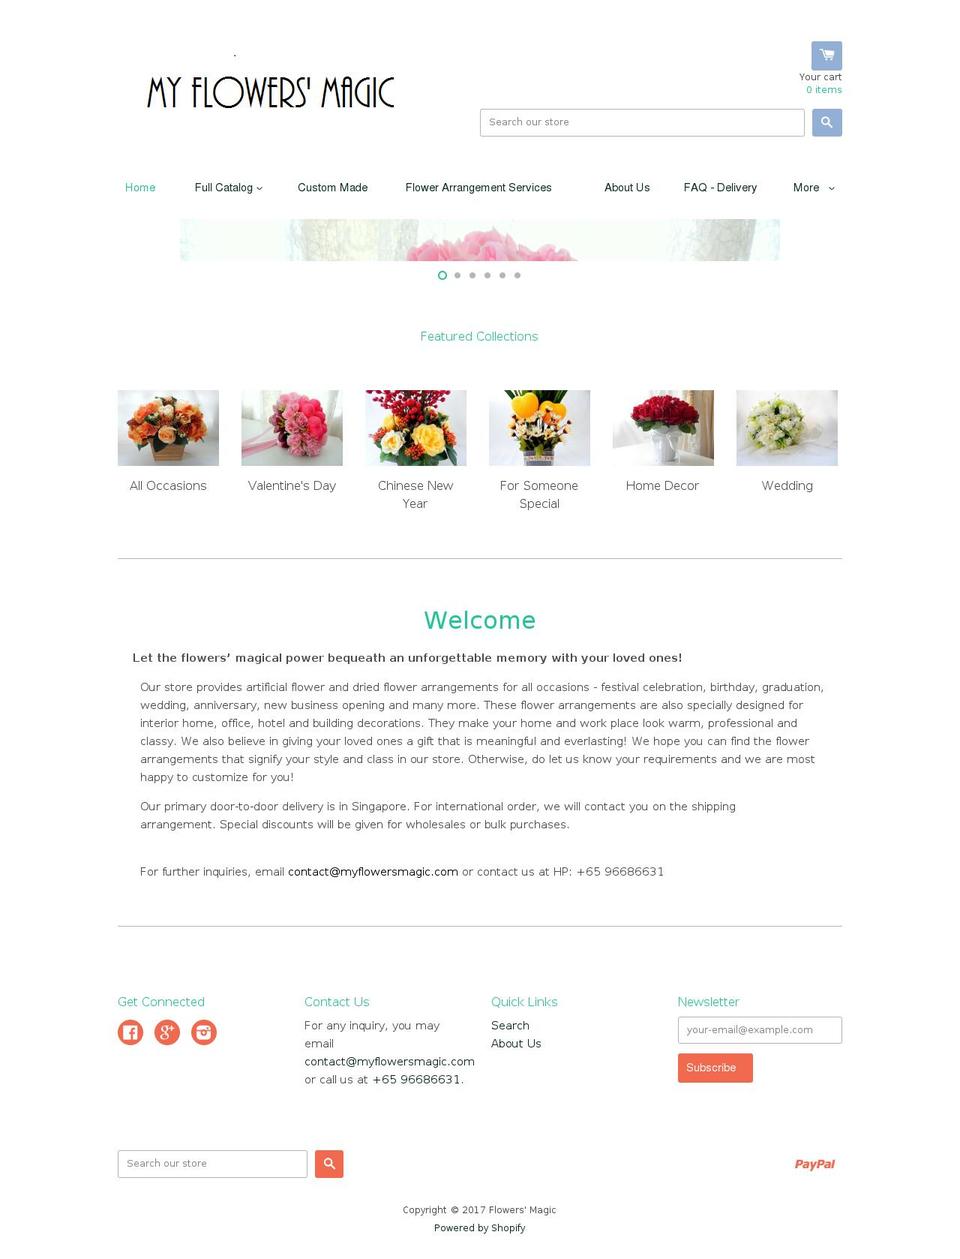 myflowersmagic.com shopify website screenshot